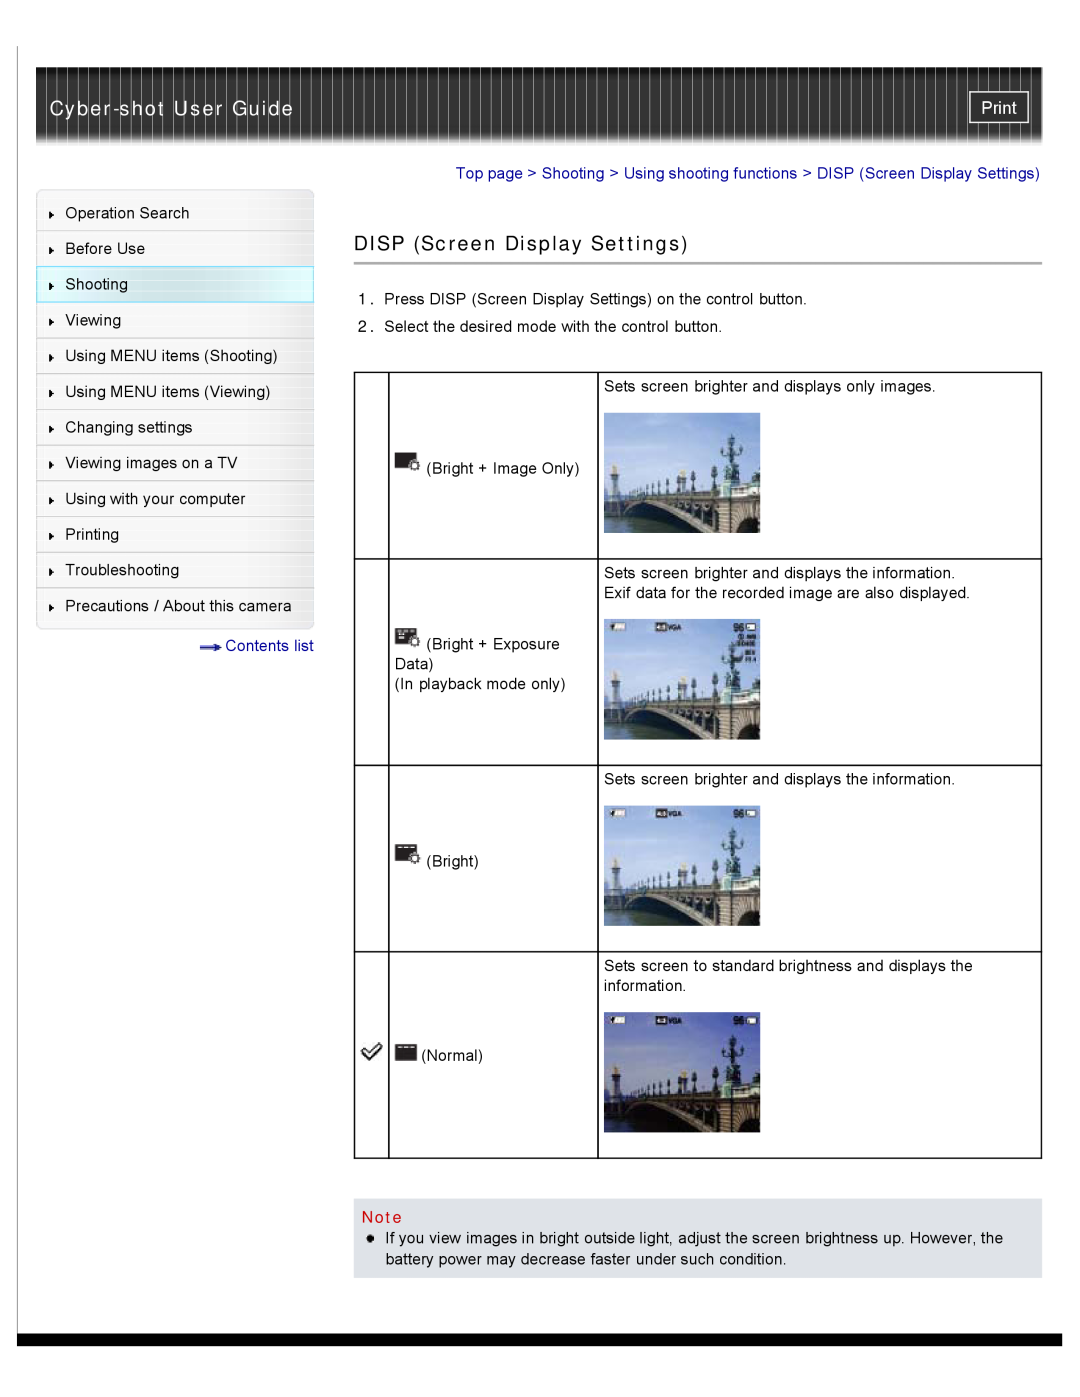 Sony DSC-W510 manual DISP Screen Display Settings, Cyber-shot User Guide, Print, Contents list 